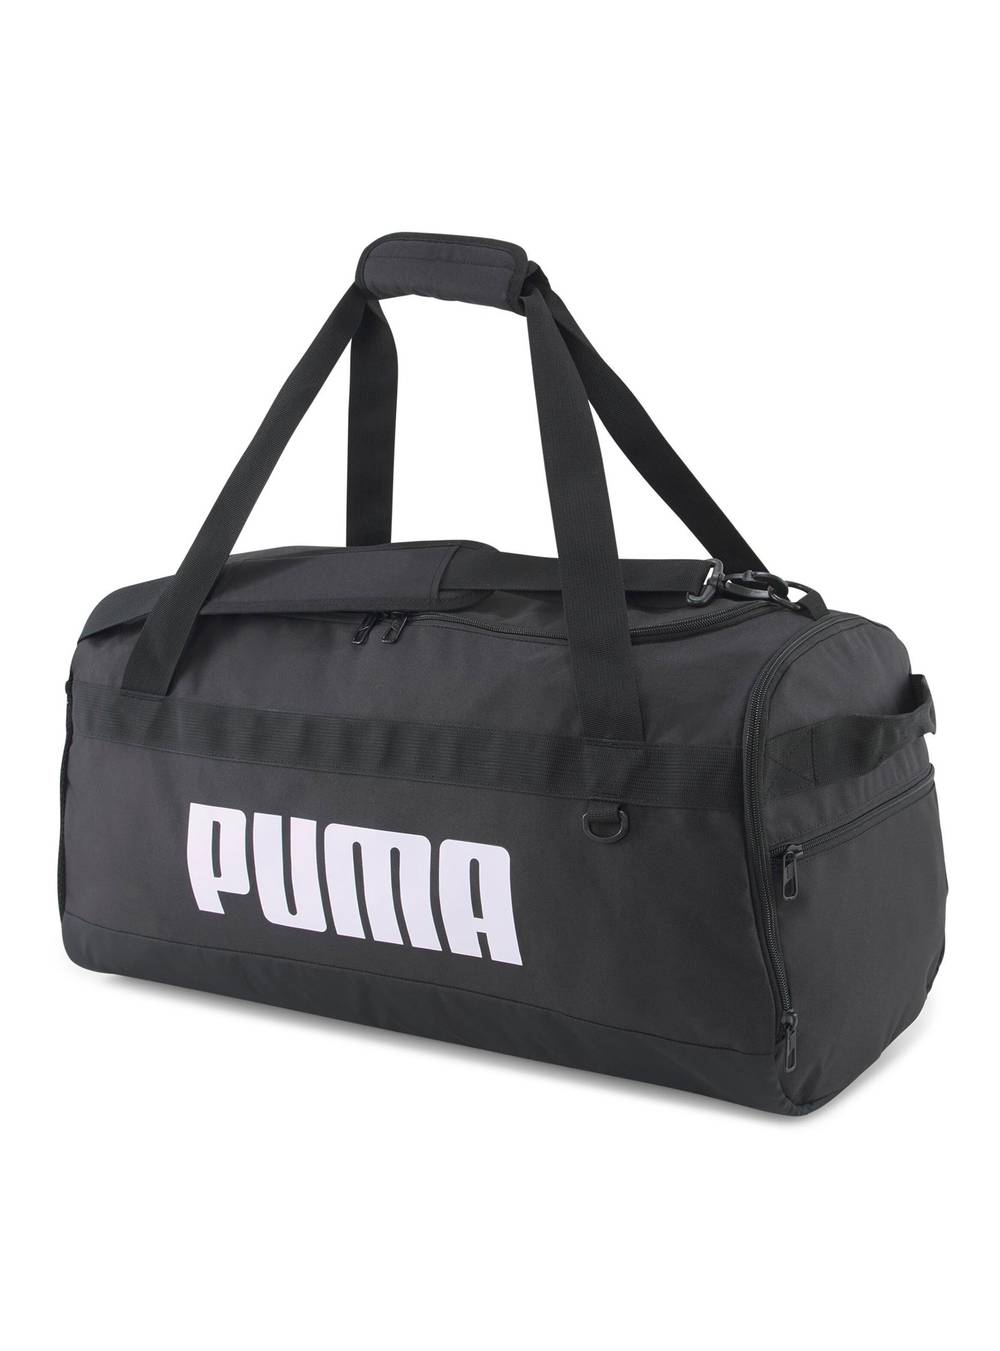 Puma bolso challenger duffel bag negro 'stand